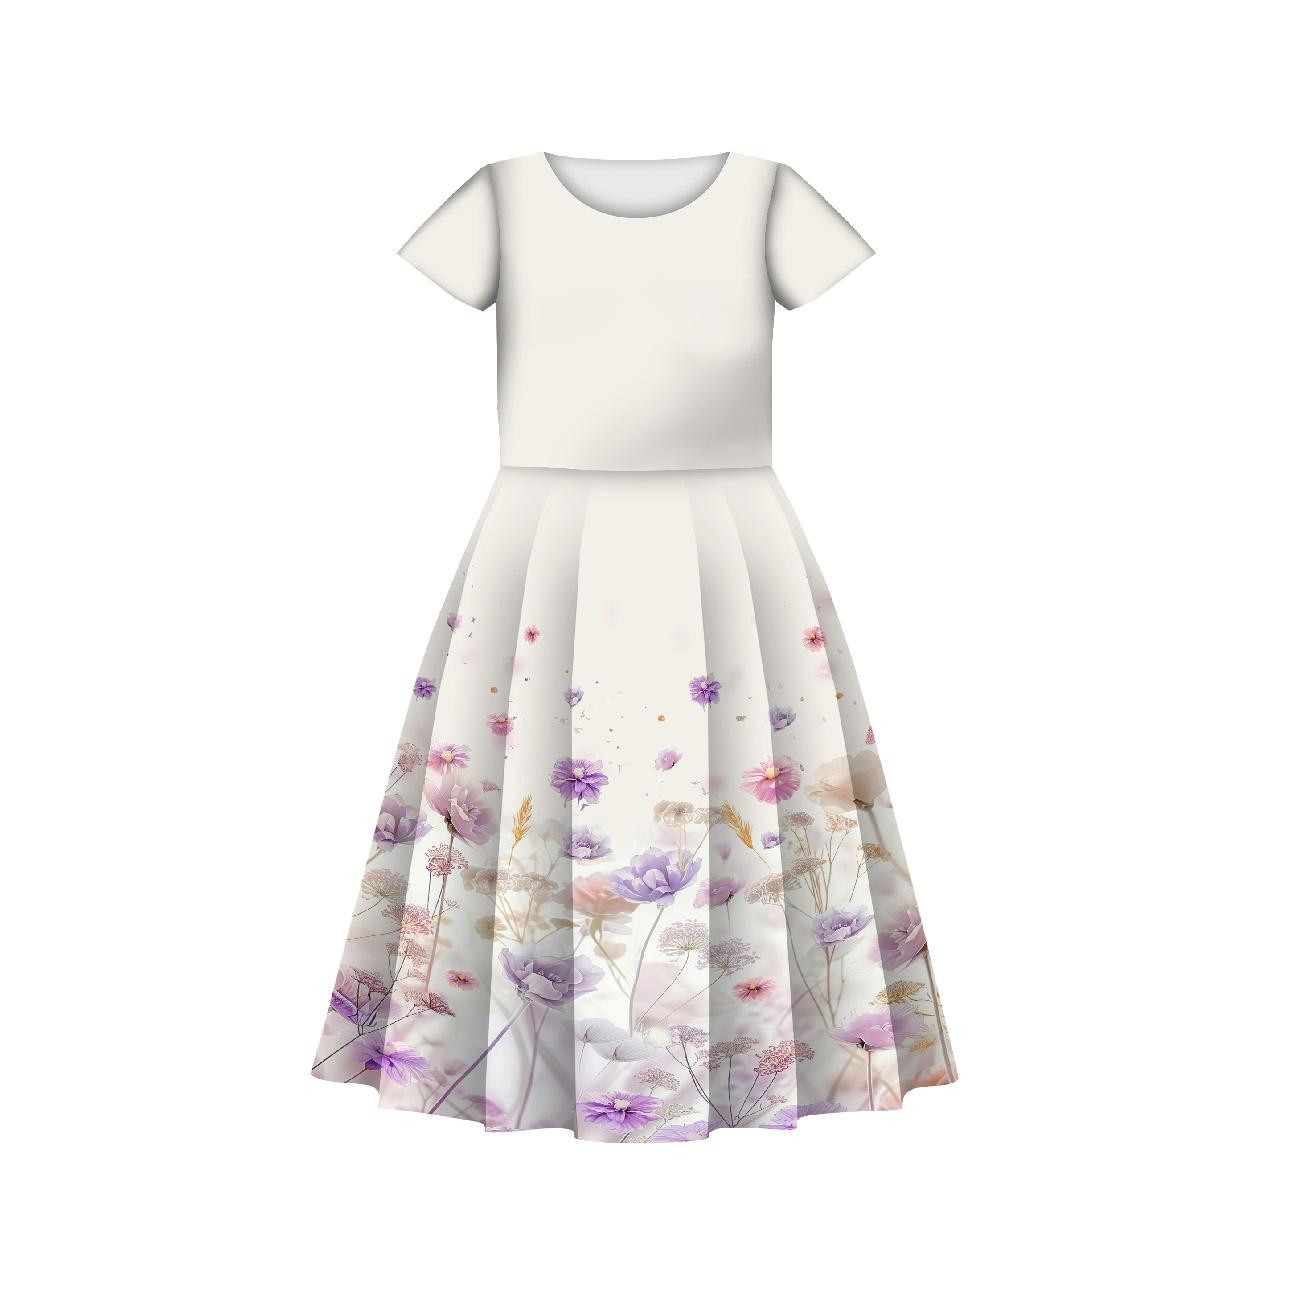 KID'S DRESS "MIA" -  FLOWERS wz.10 - sewing set